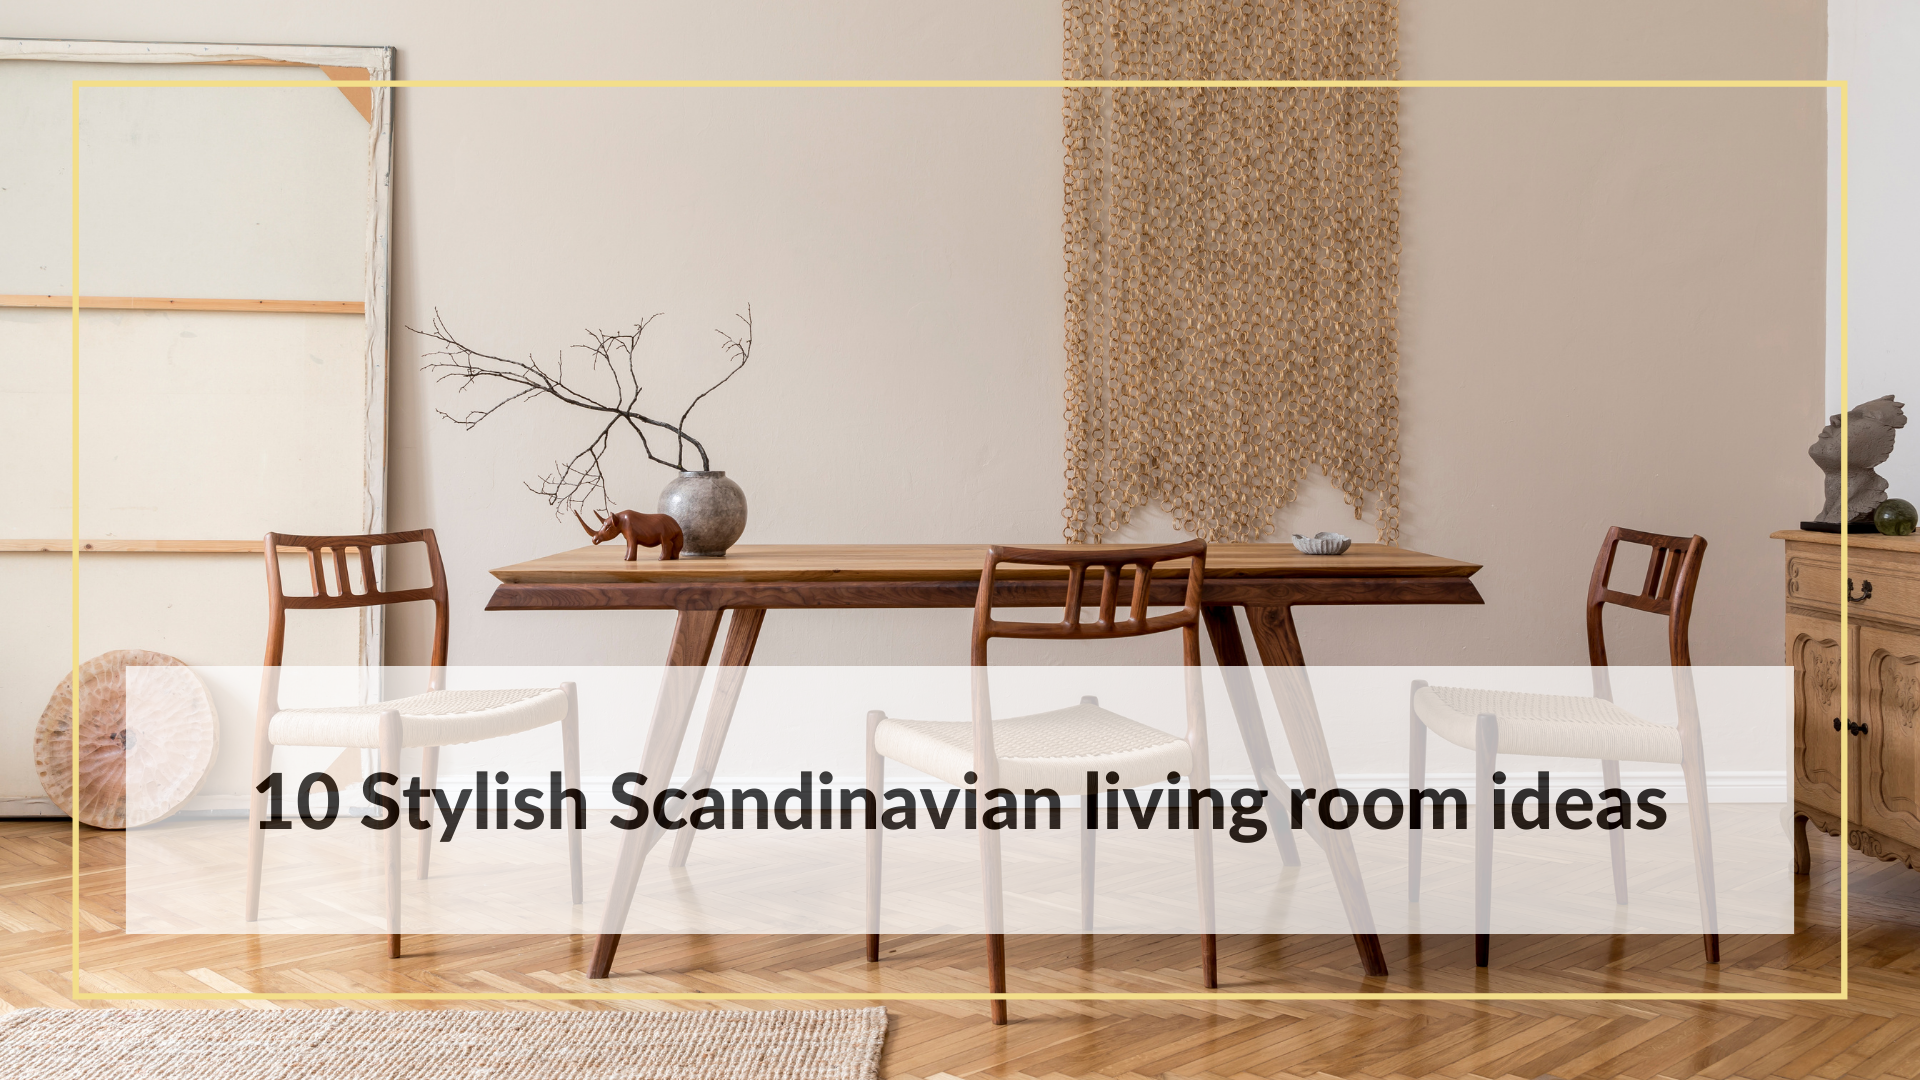 10 Stylish Scandinavian living room ideas